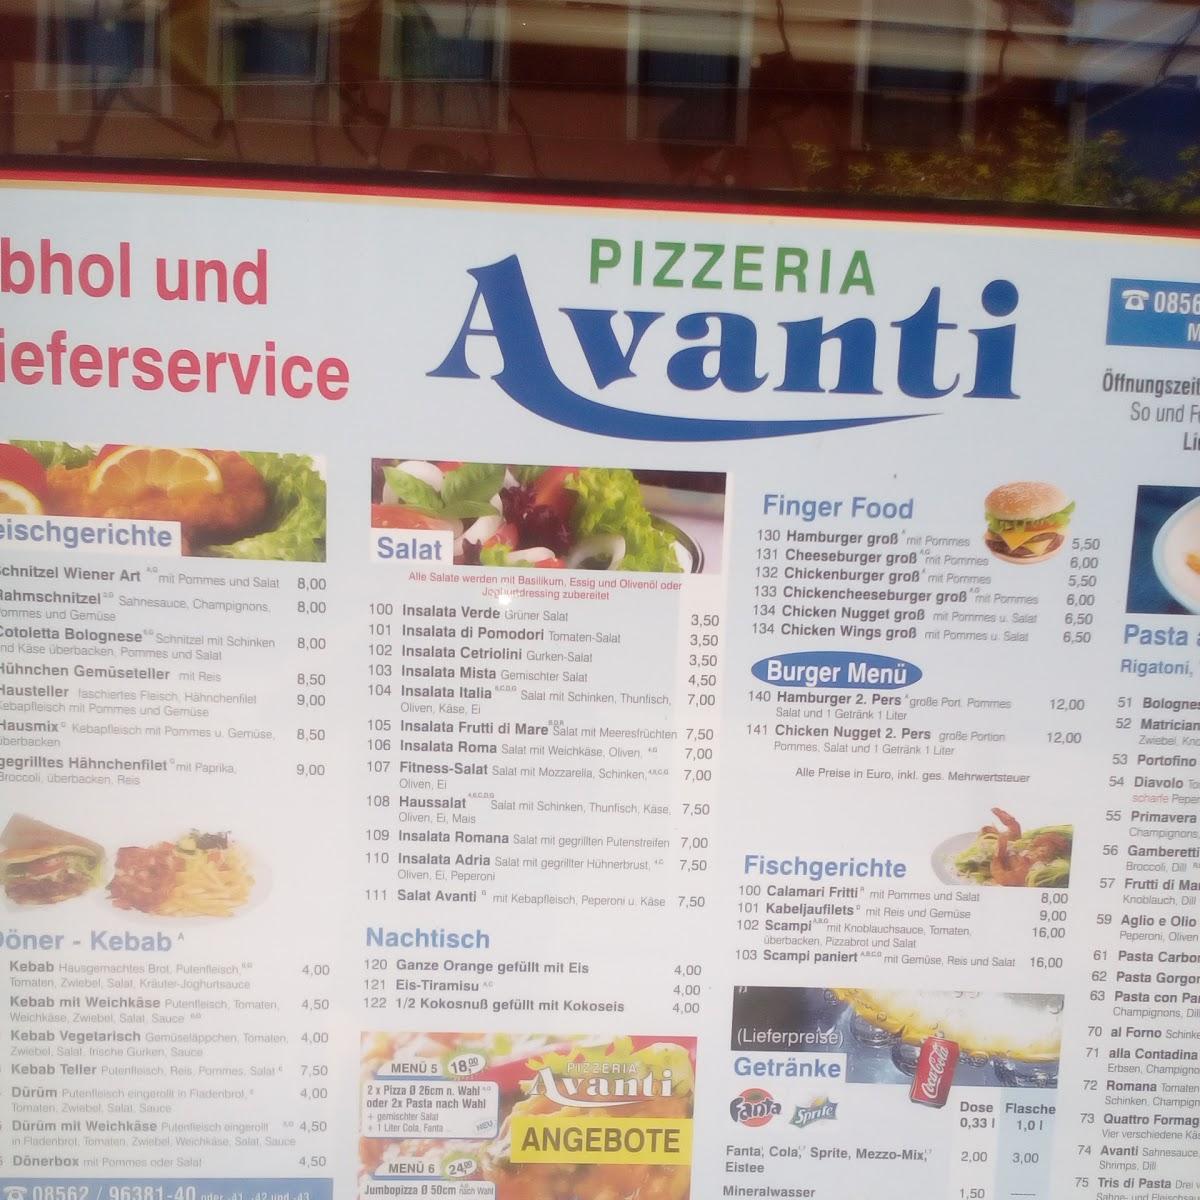 Restaurant "Pizzeria AVANTI Lieferservice" in Triftern